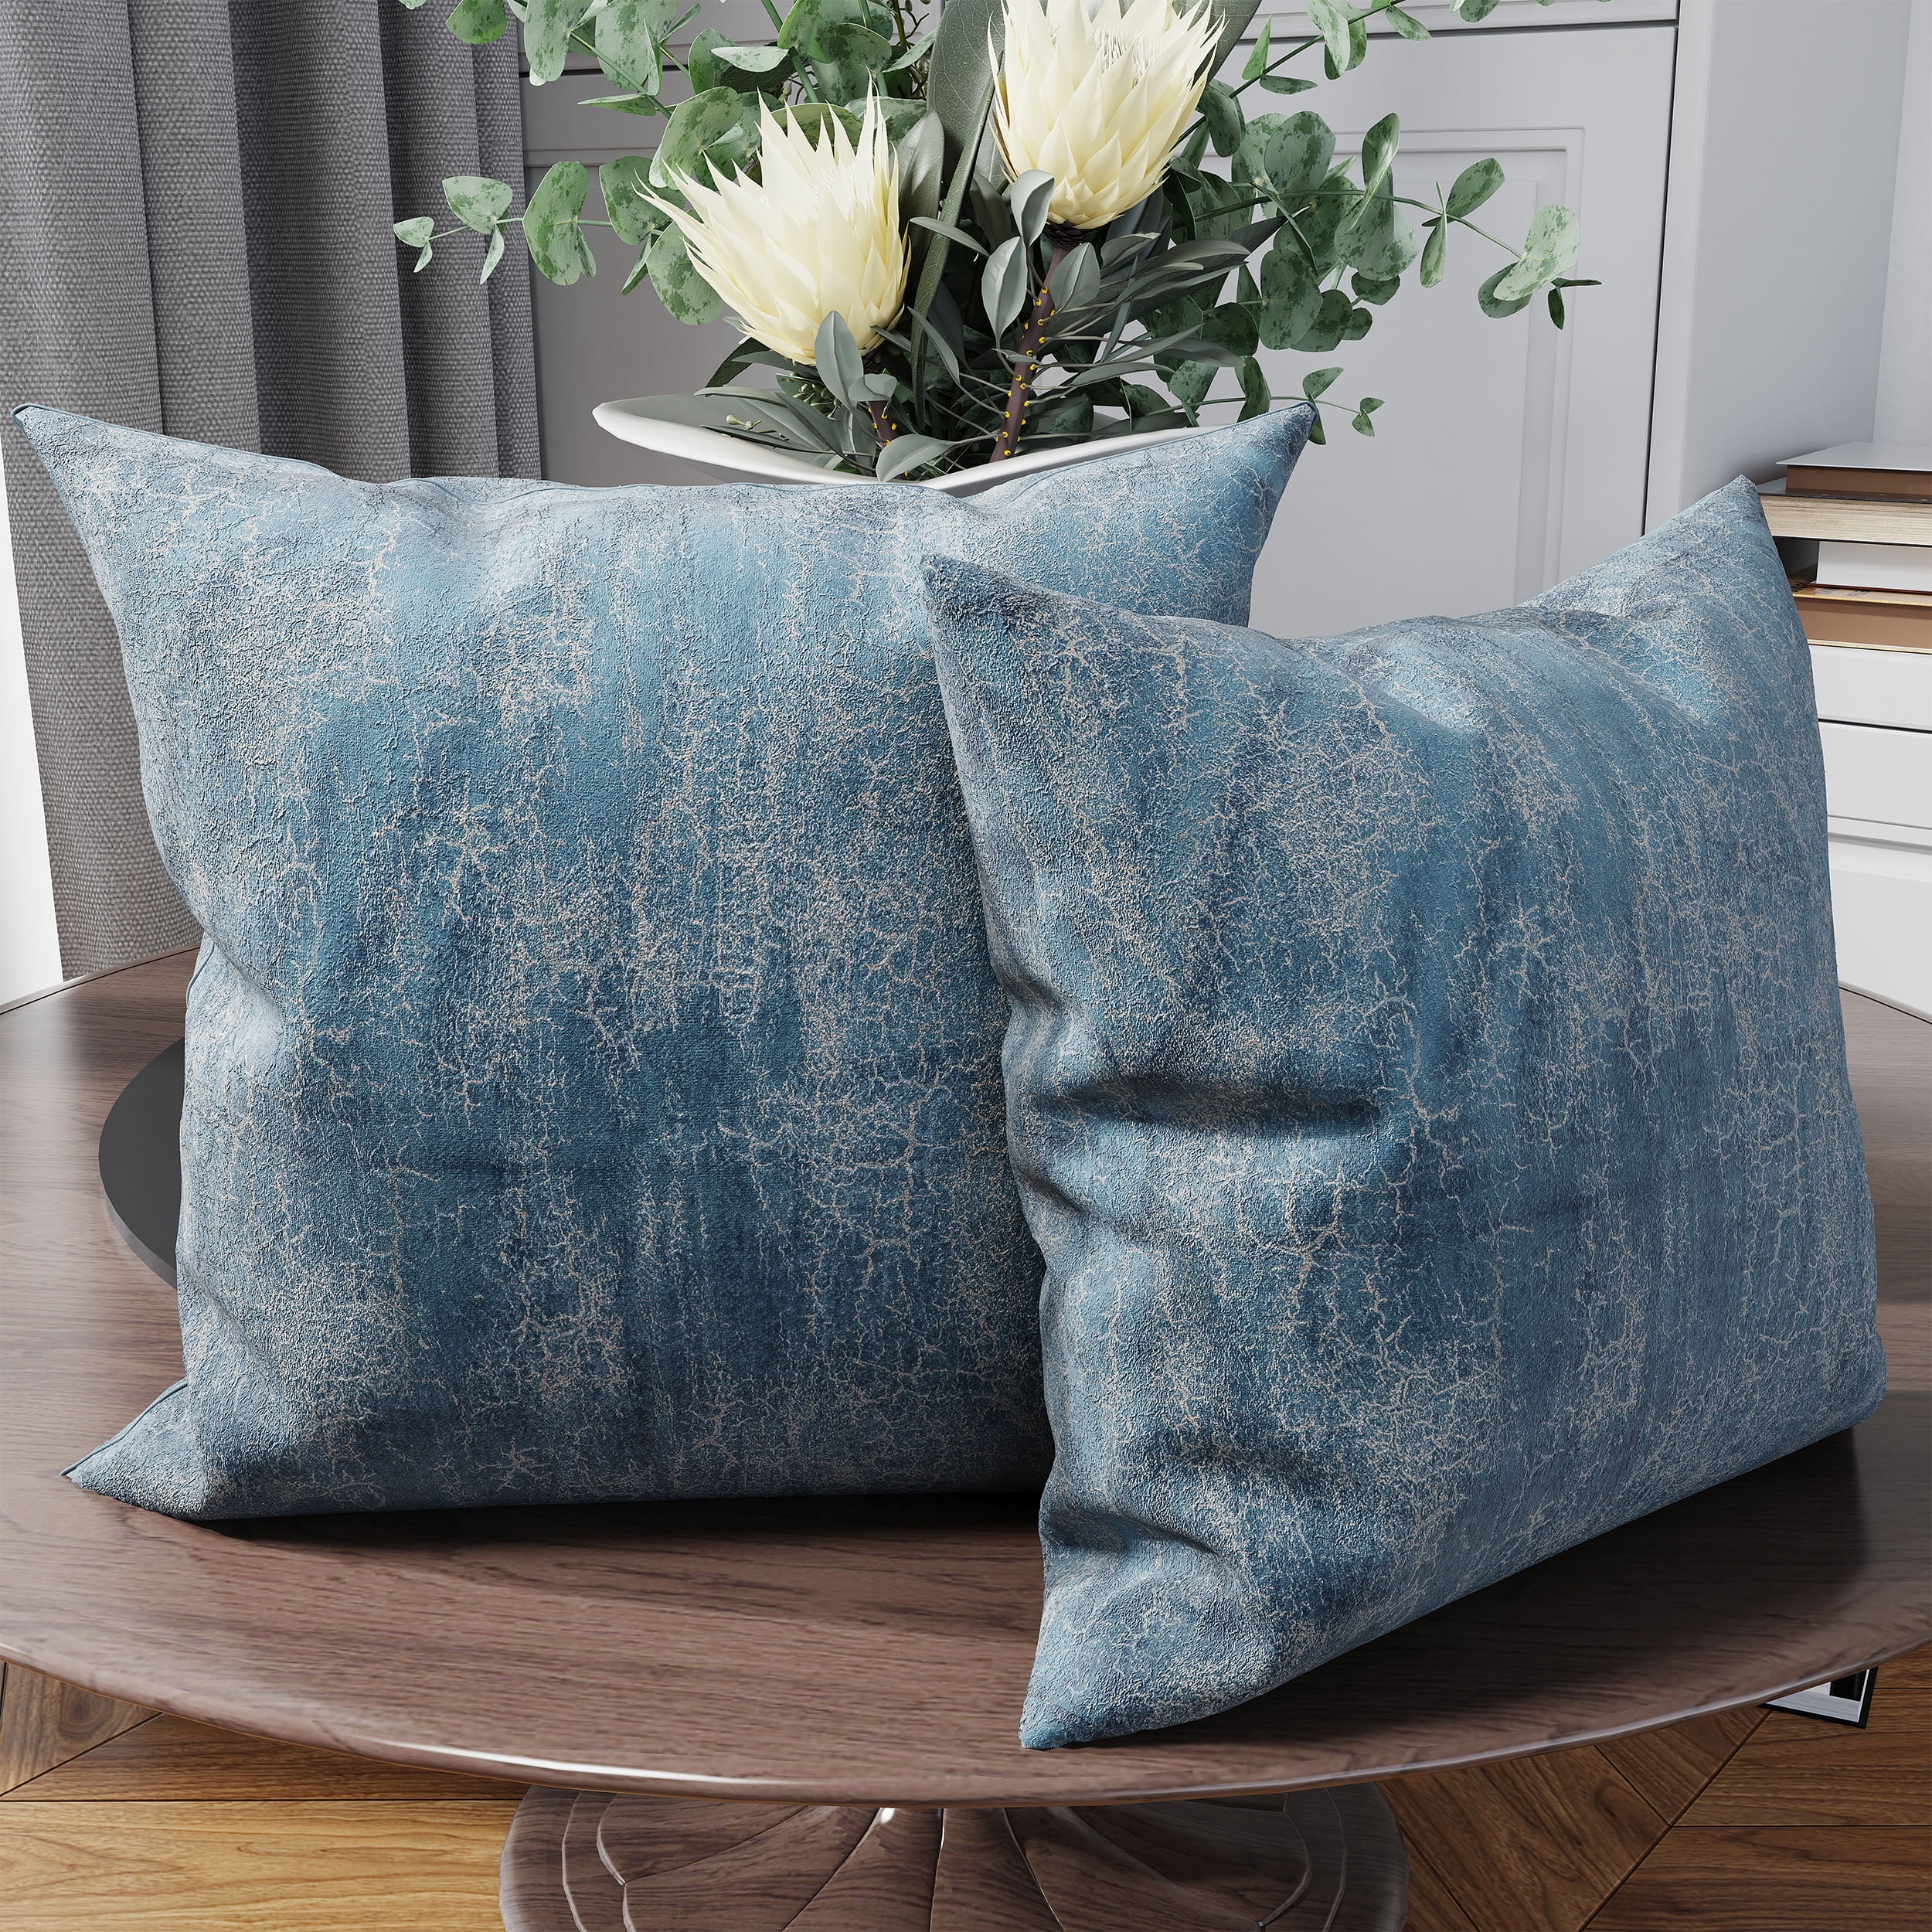 18"*18" Polyester Starfish Pillow Case Sofa Waist Throw Cushion Cover Home Decor 